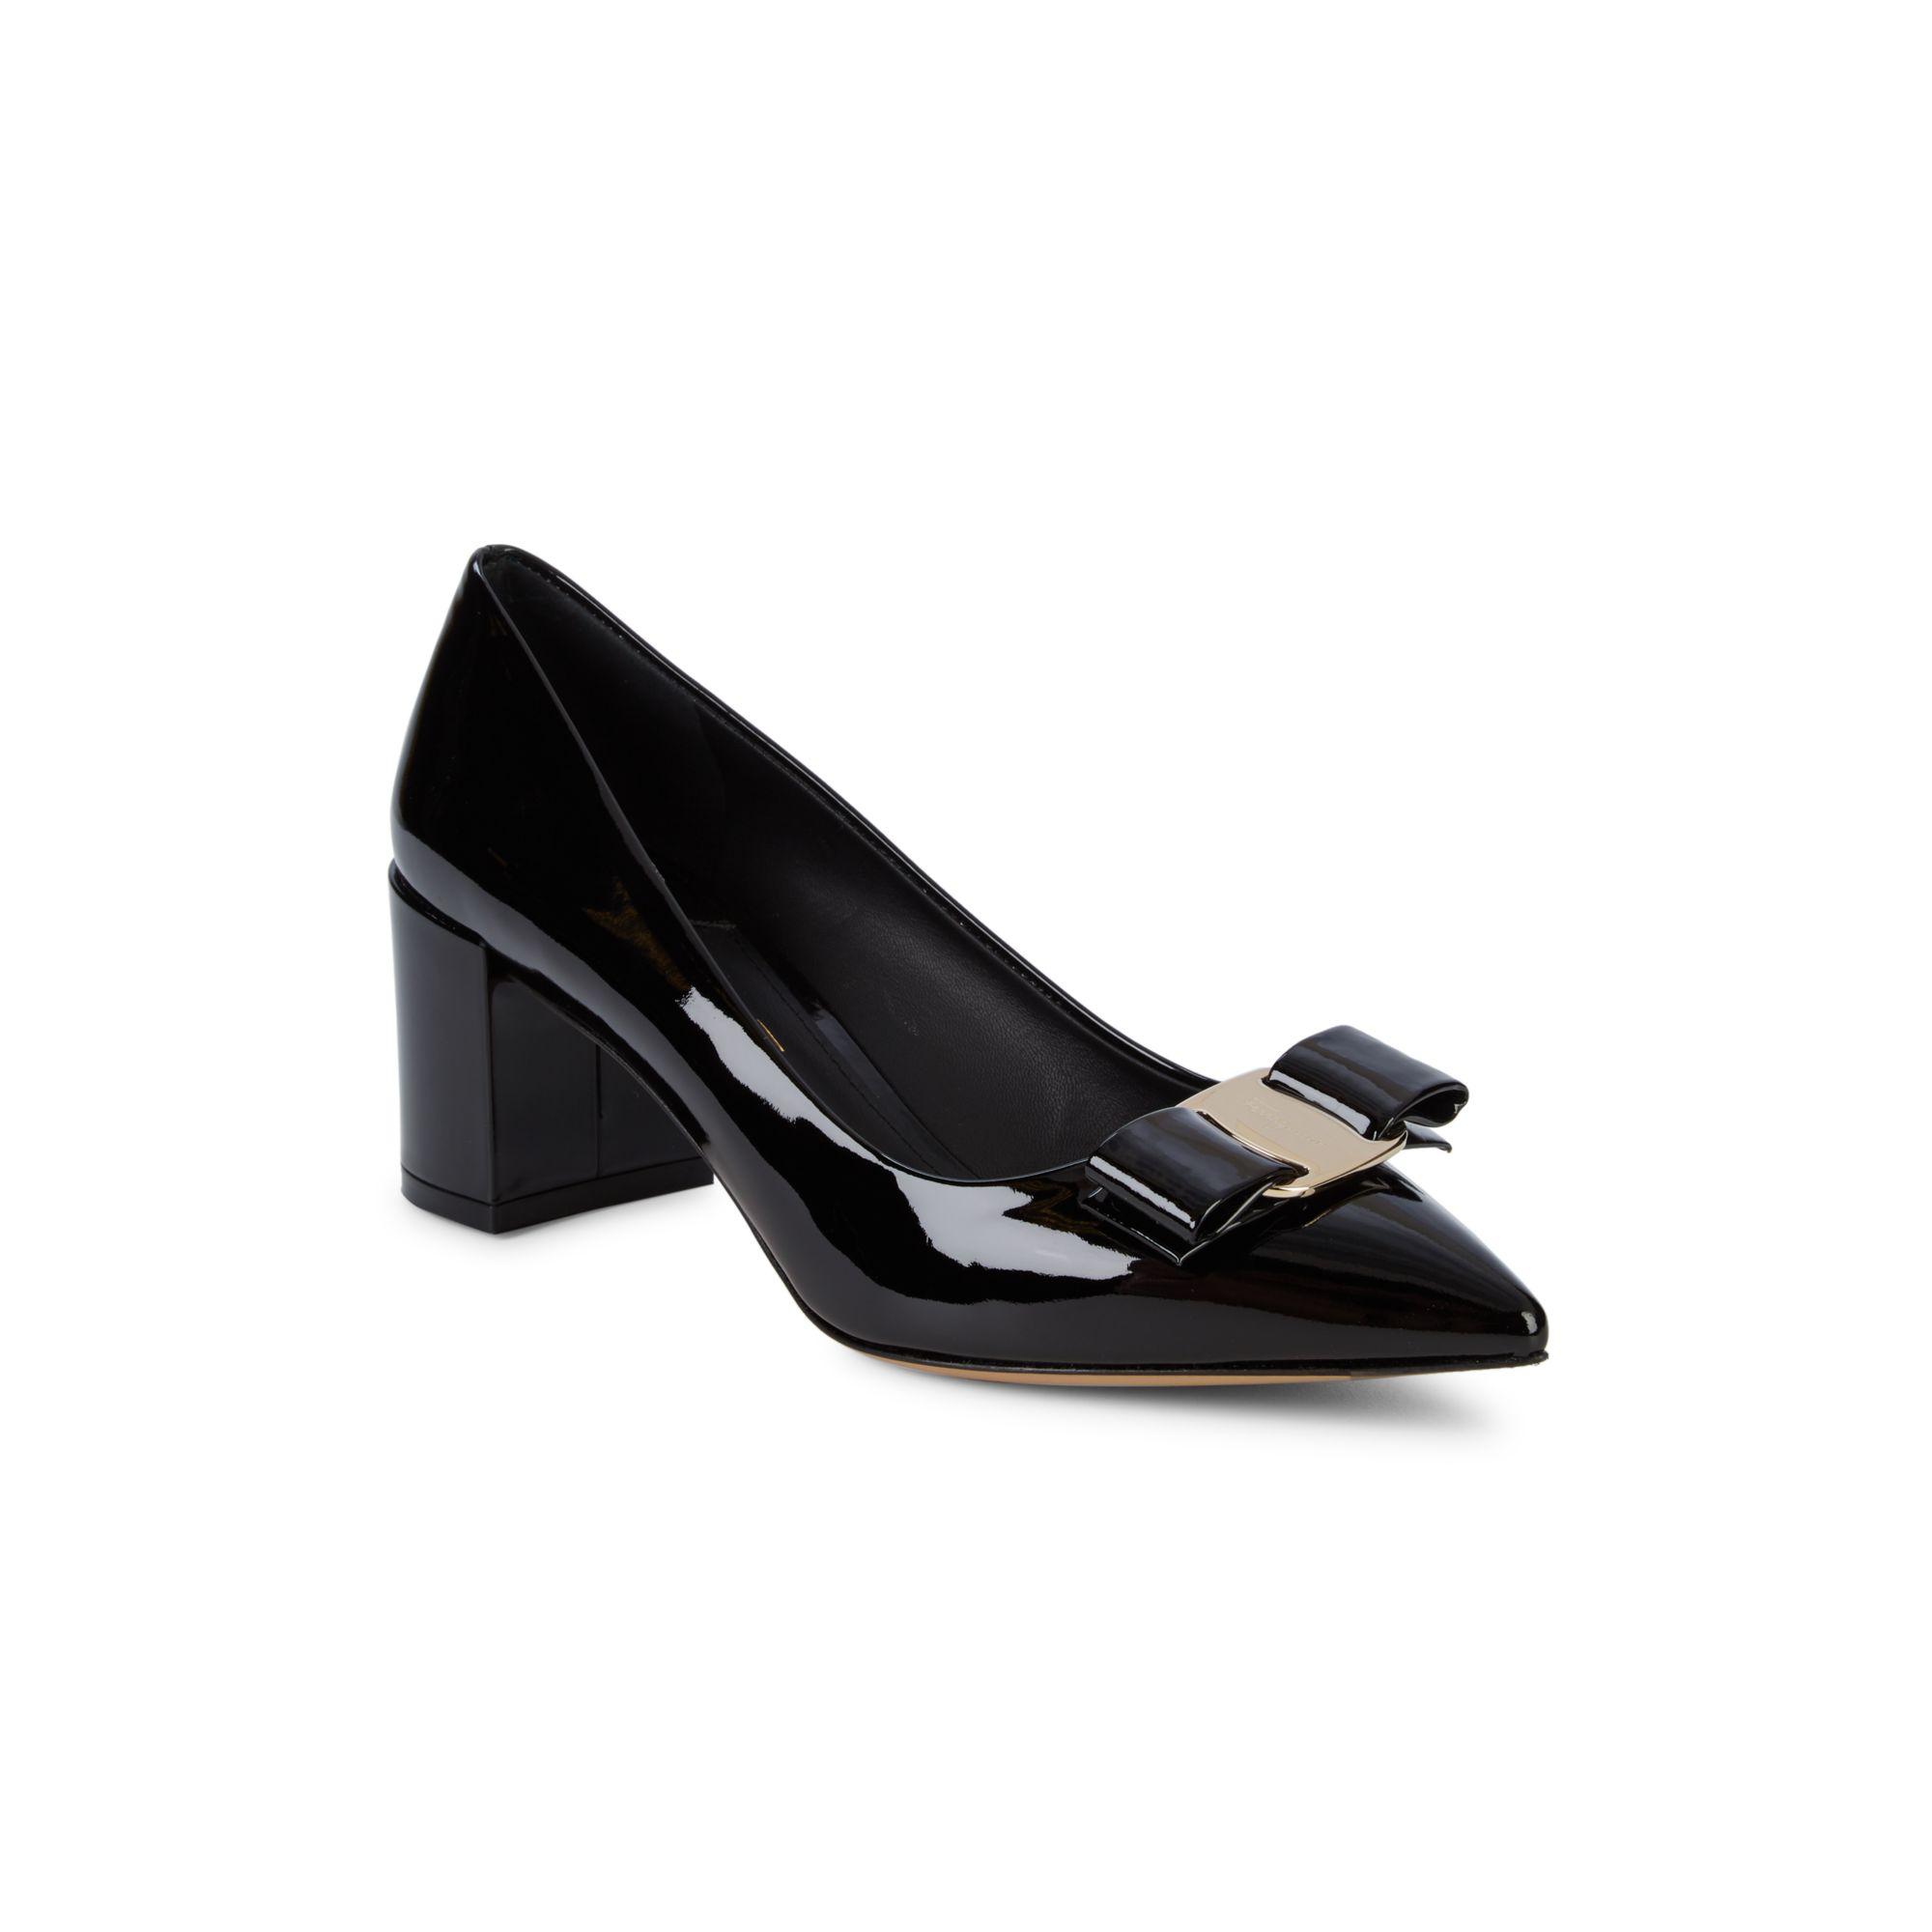 Ferragamo Alice Patent Leather Block-heel Pumps in Nero (Black) - Lyst